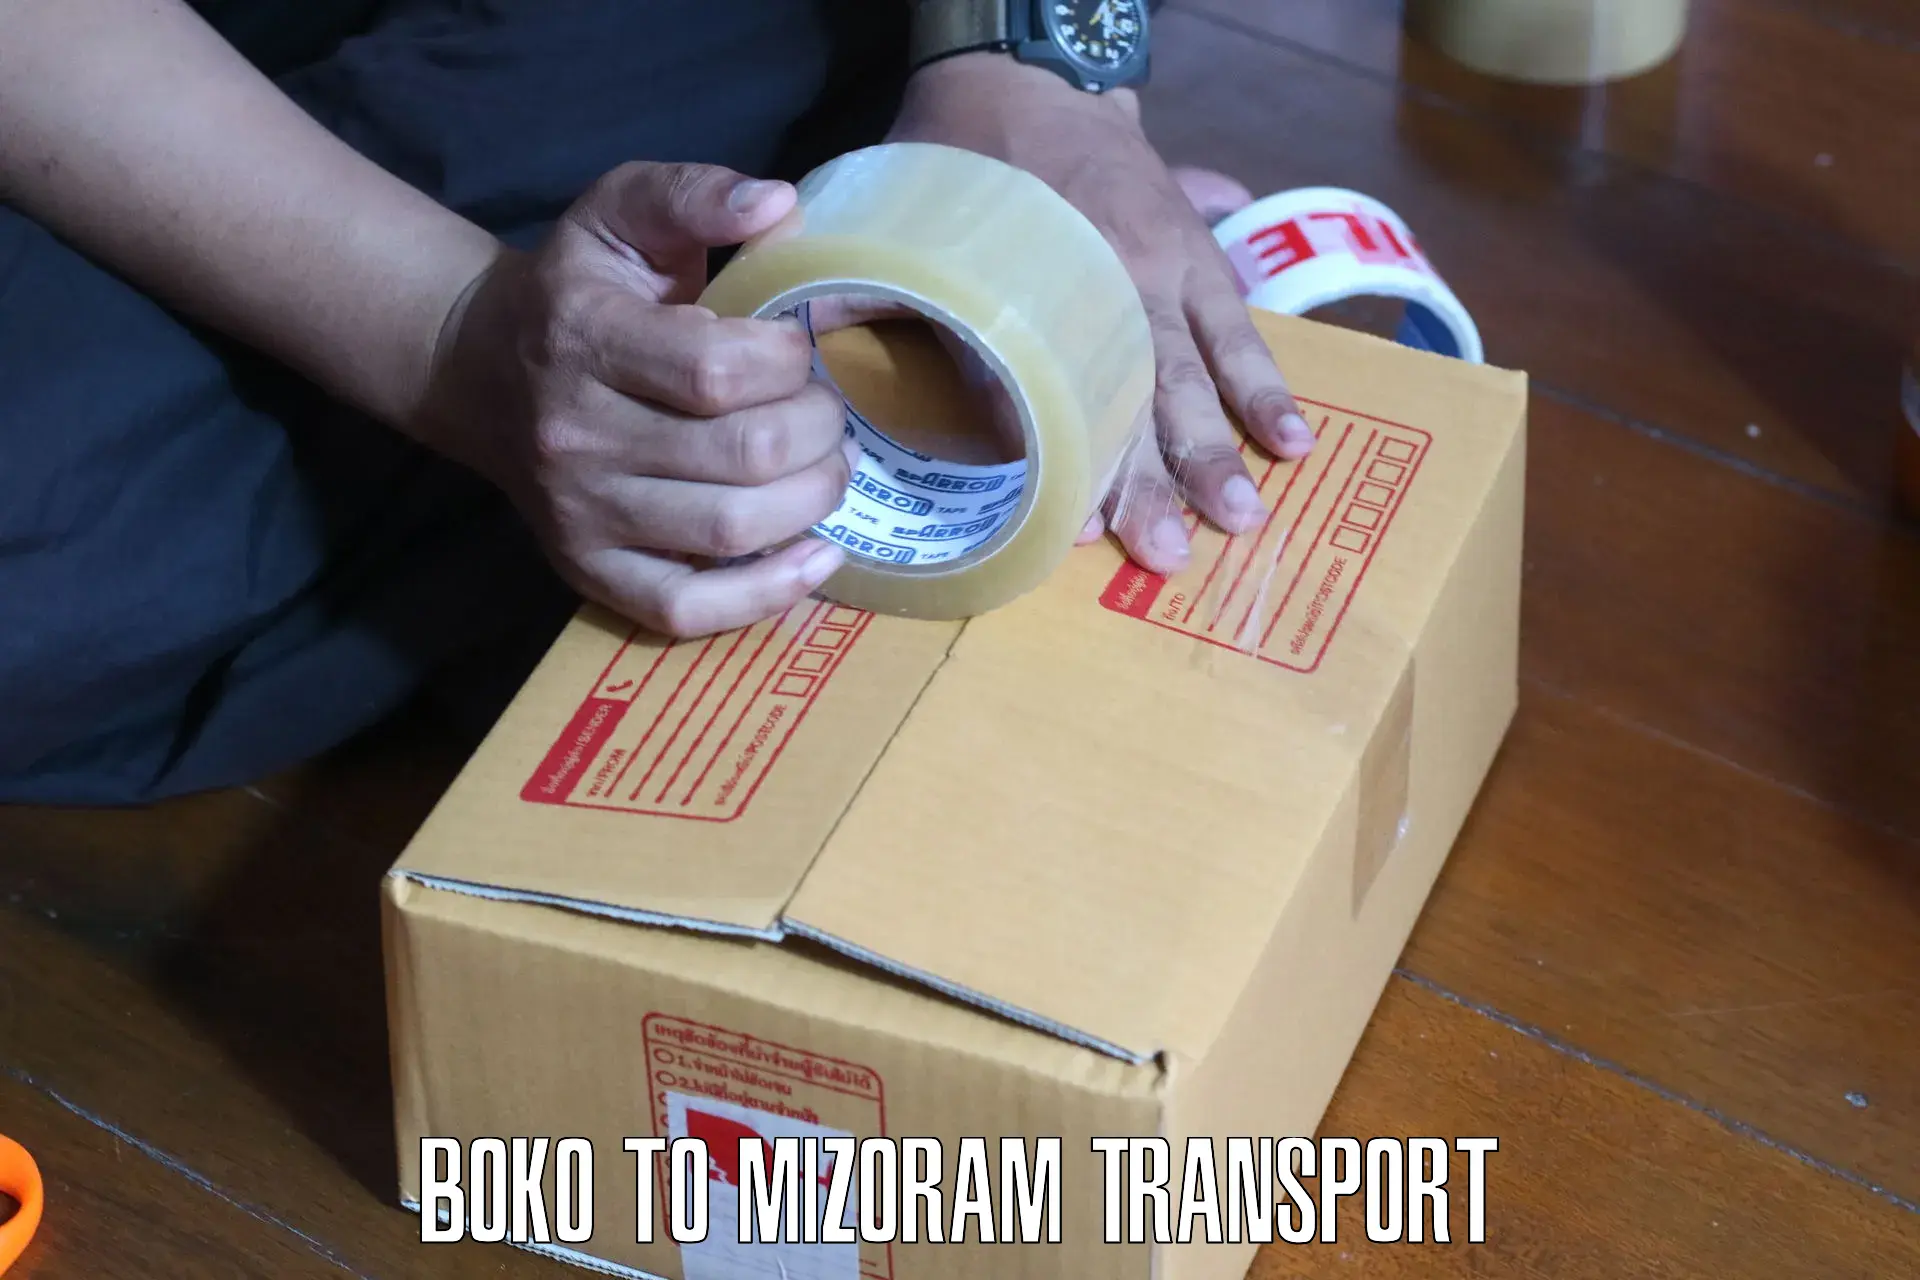 Shipping partner Boko to Mizoram